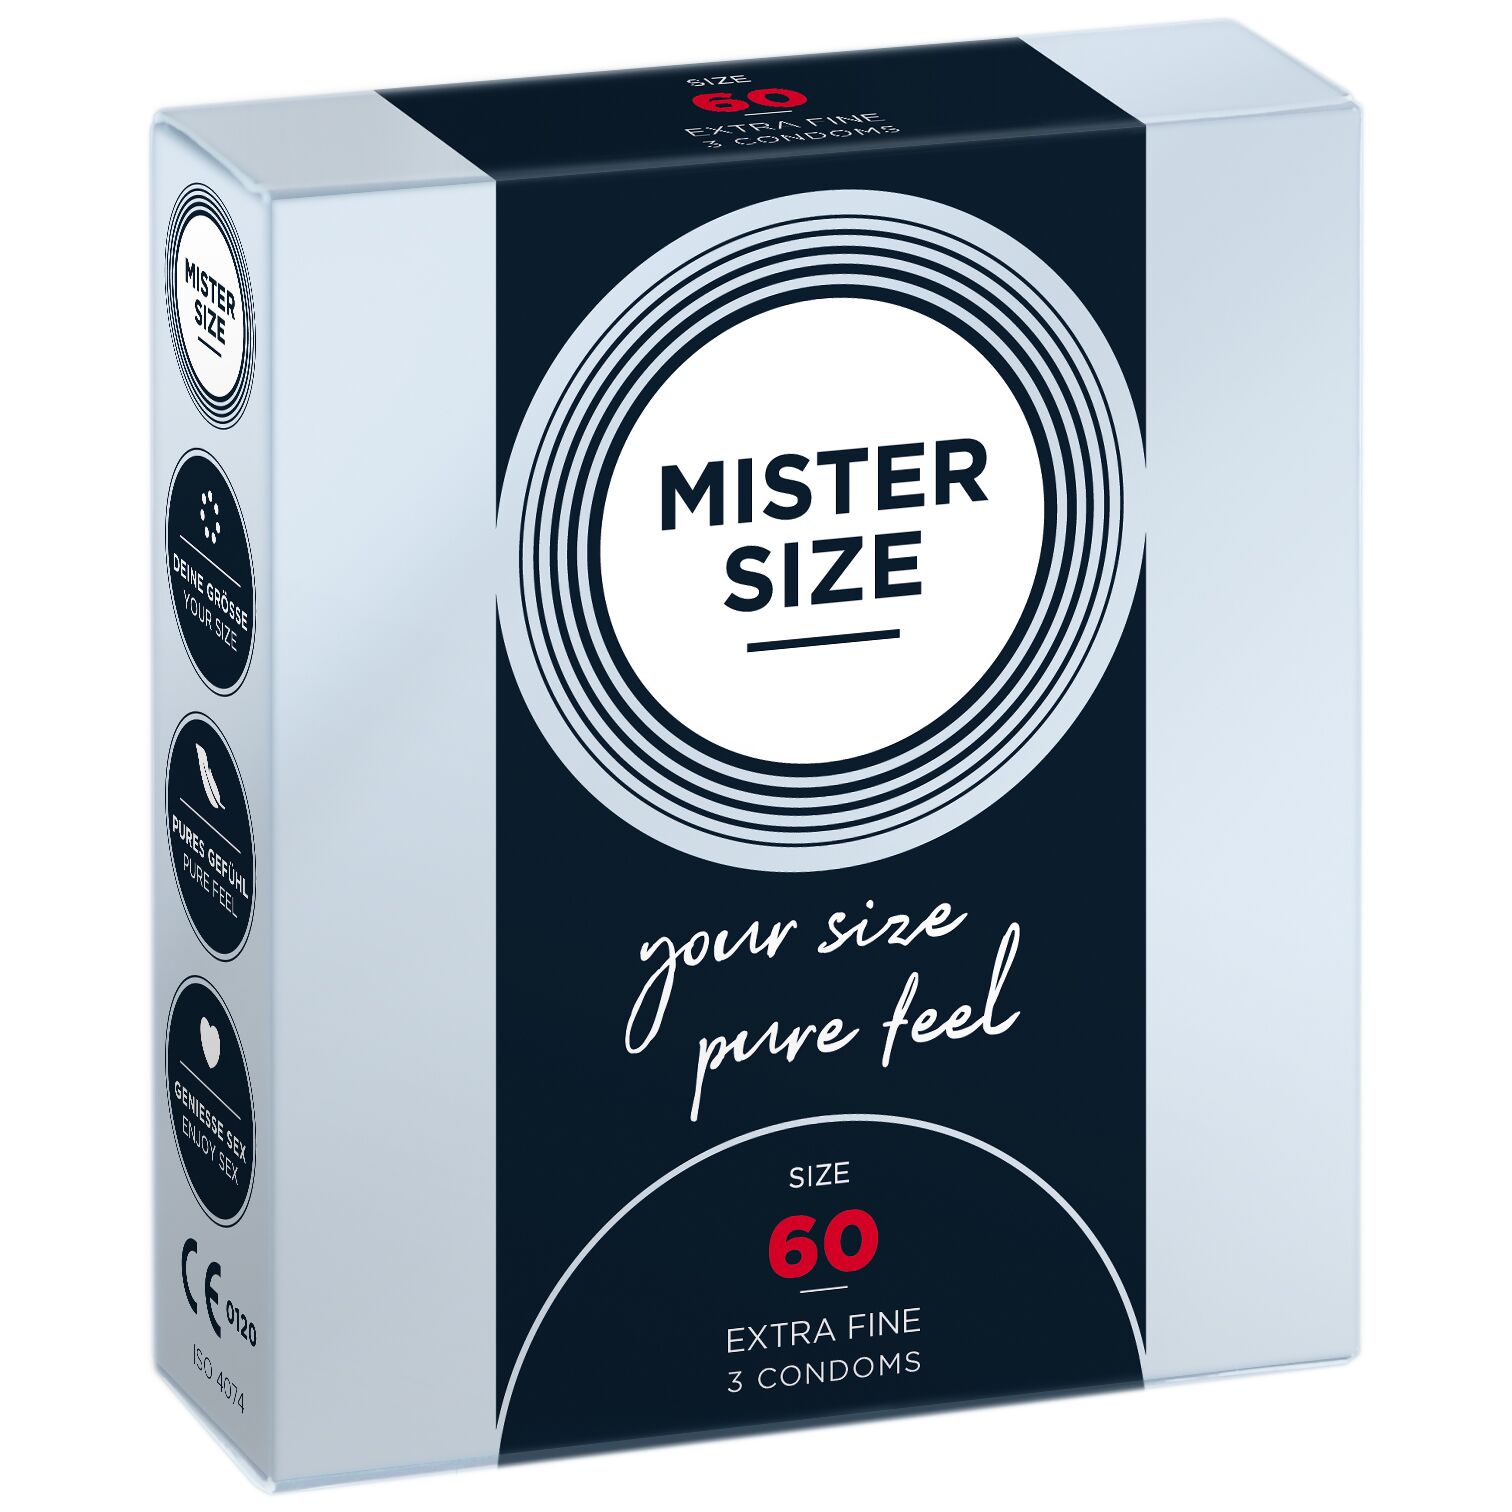 Презерва�тивы Mister Size - pure feel - 60 (3 condoms), толщина 0,05 мм